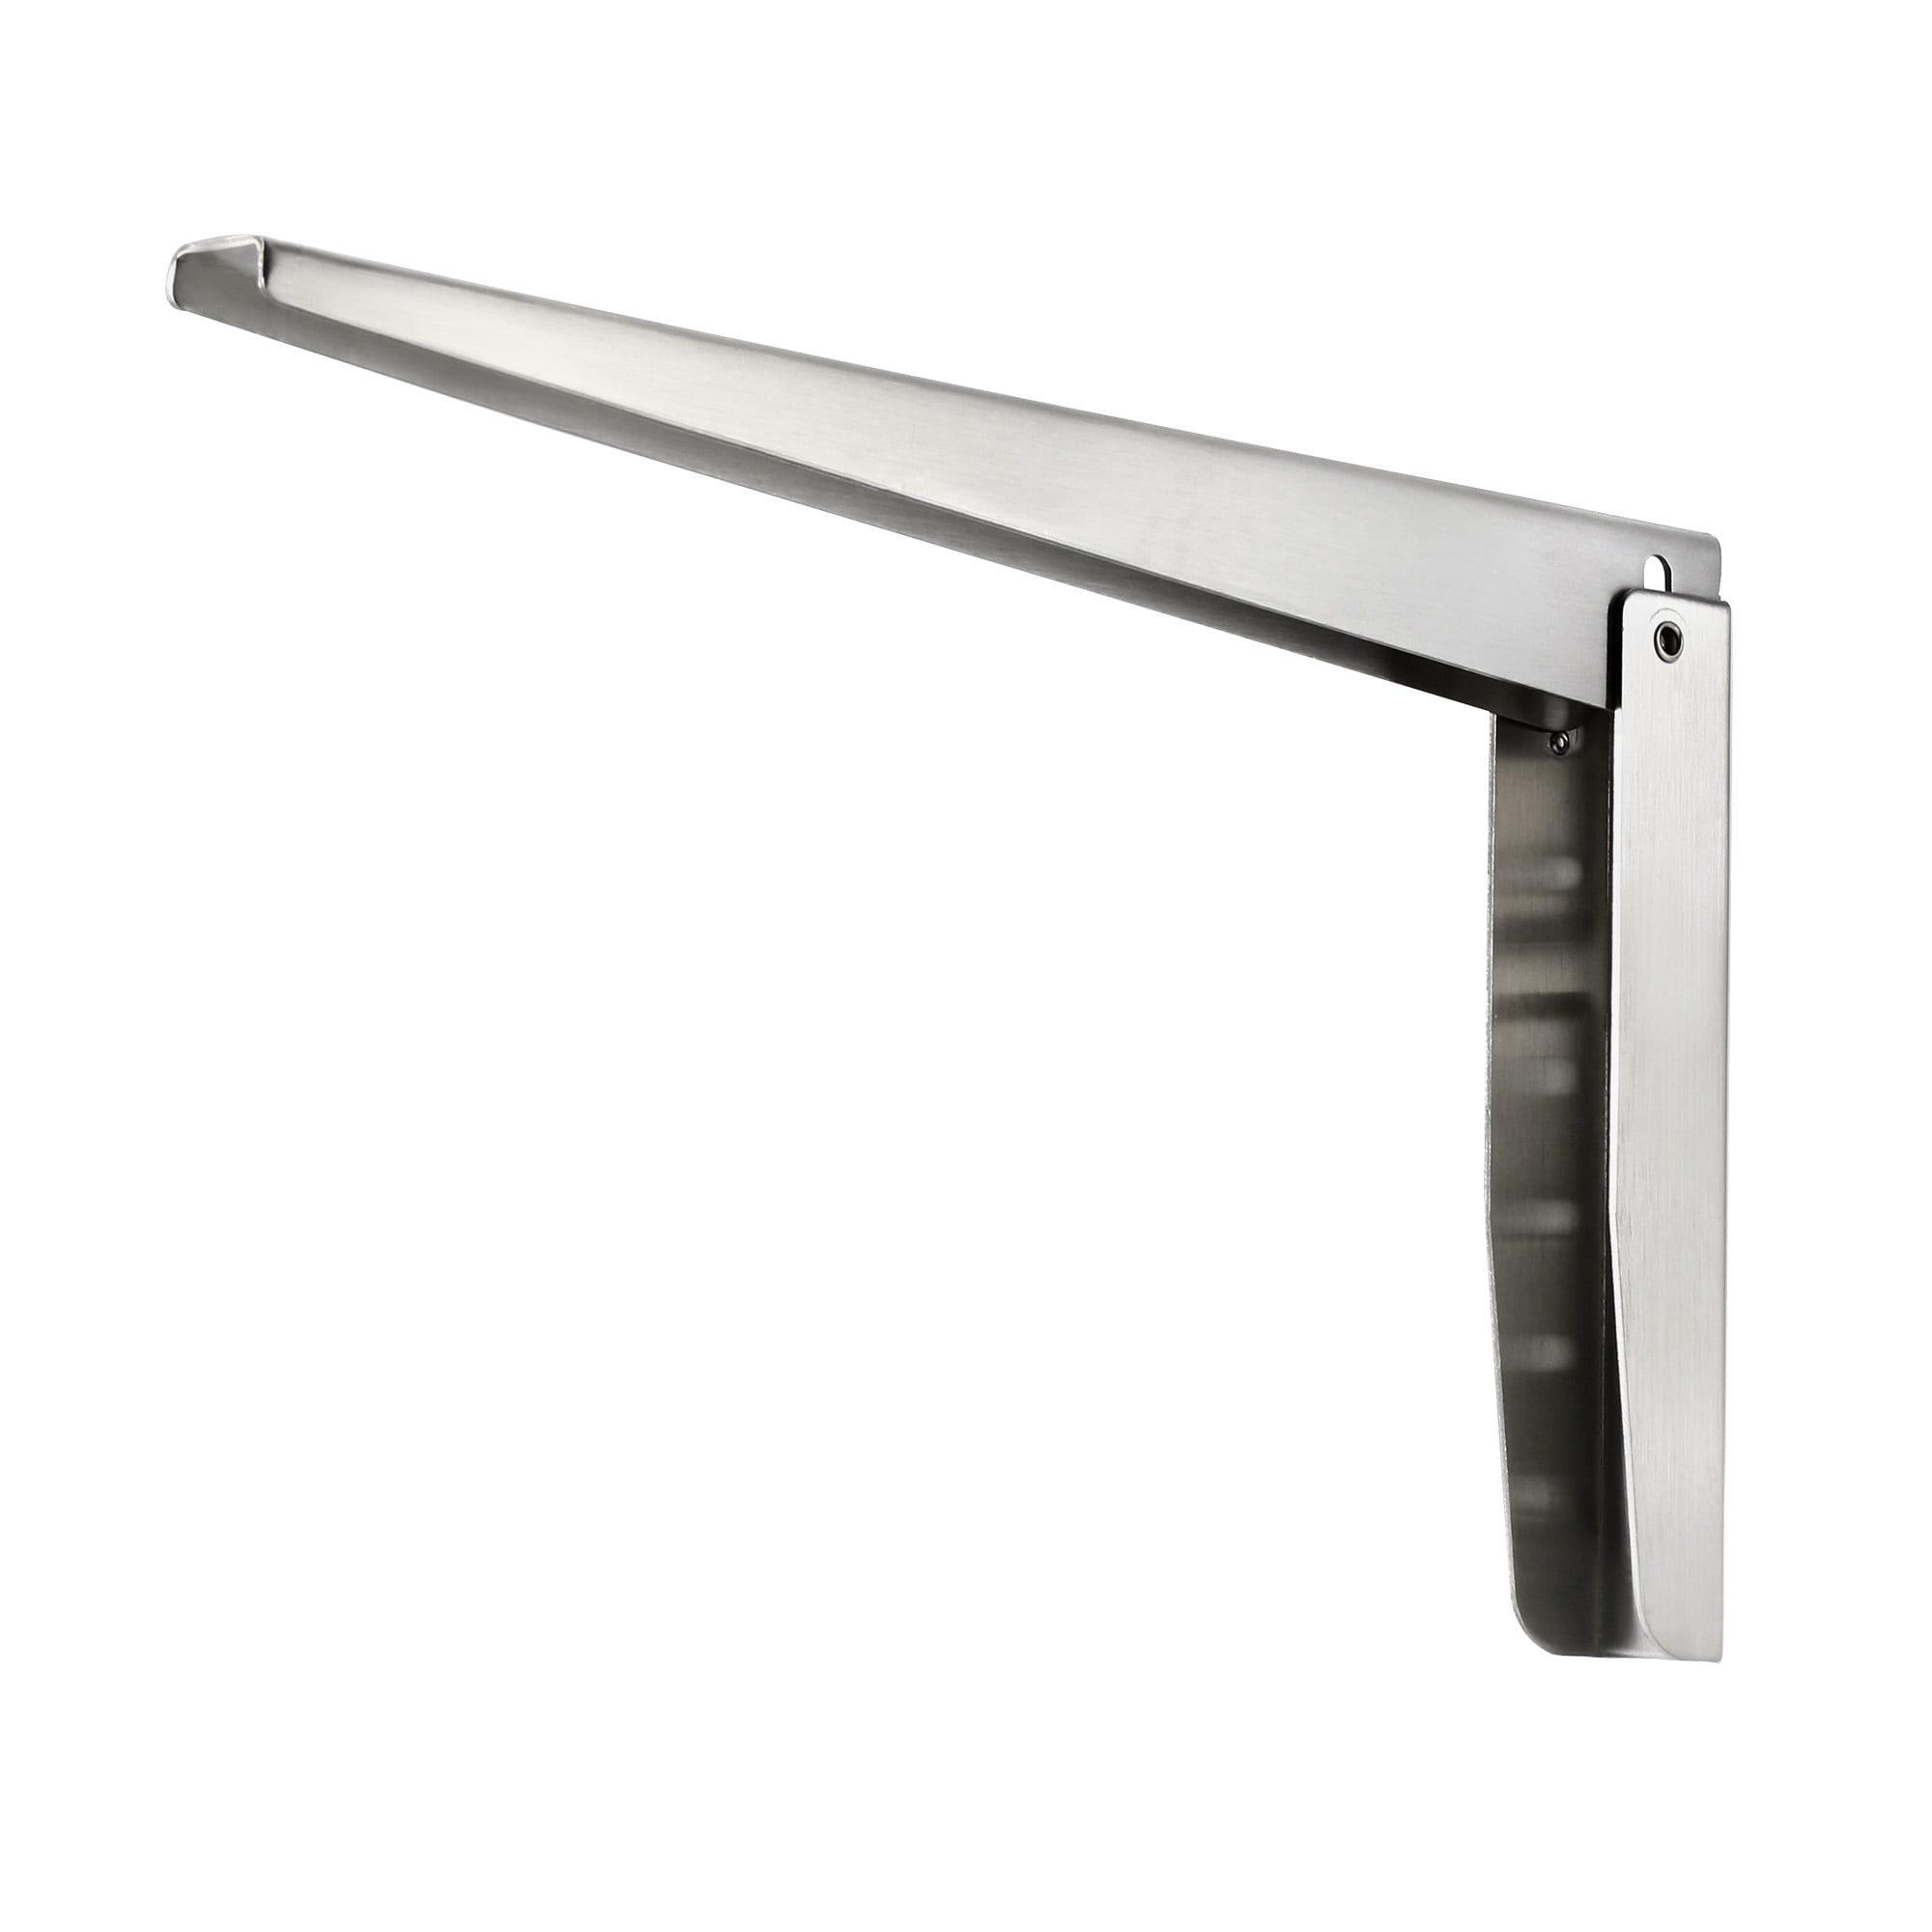 Folding Bracket 6" 150mm Shelves Table Desk Wall Mount Support Long Release 2pcs 